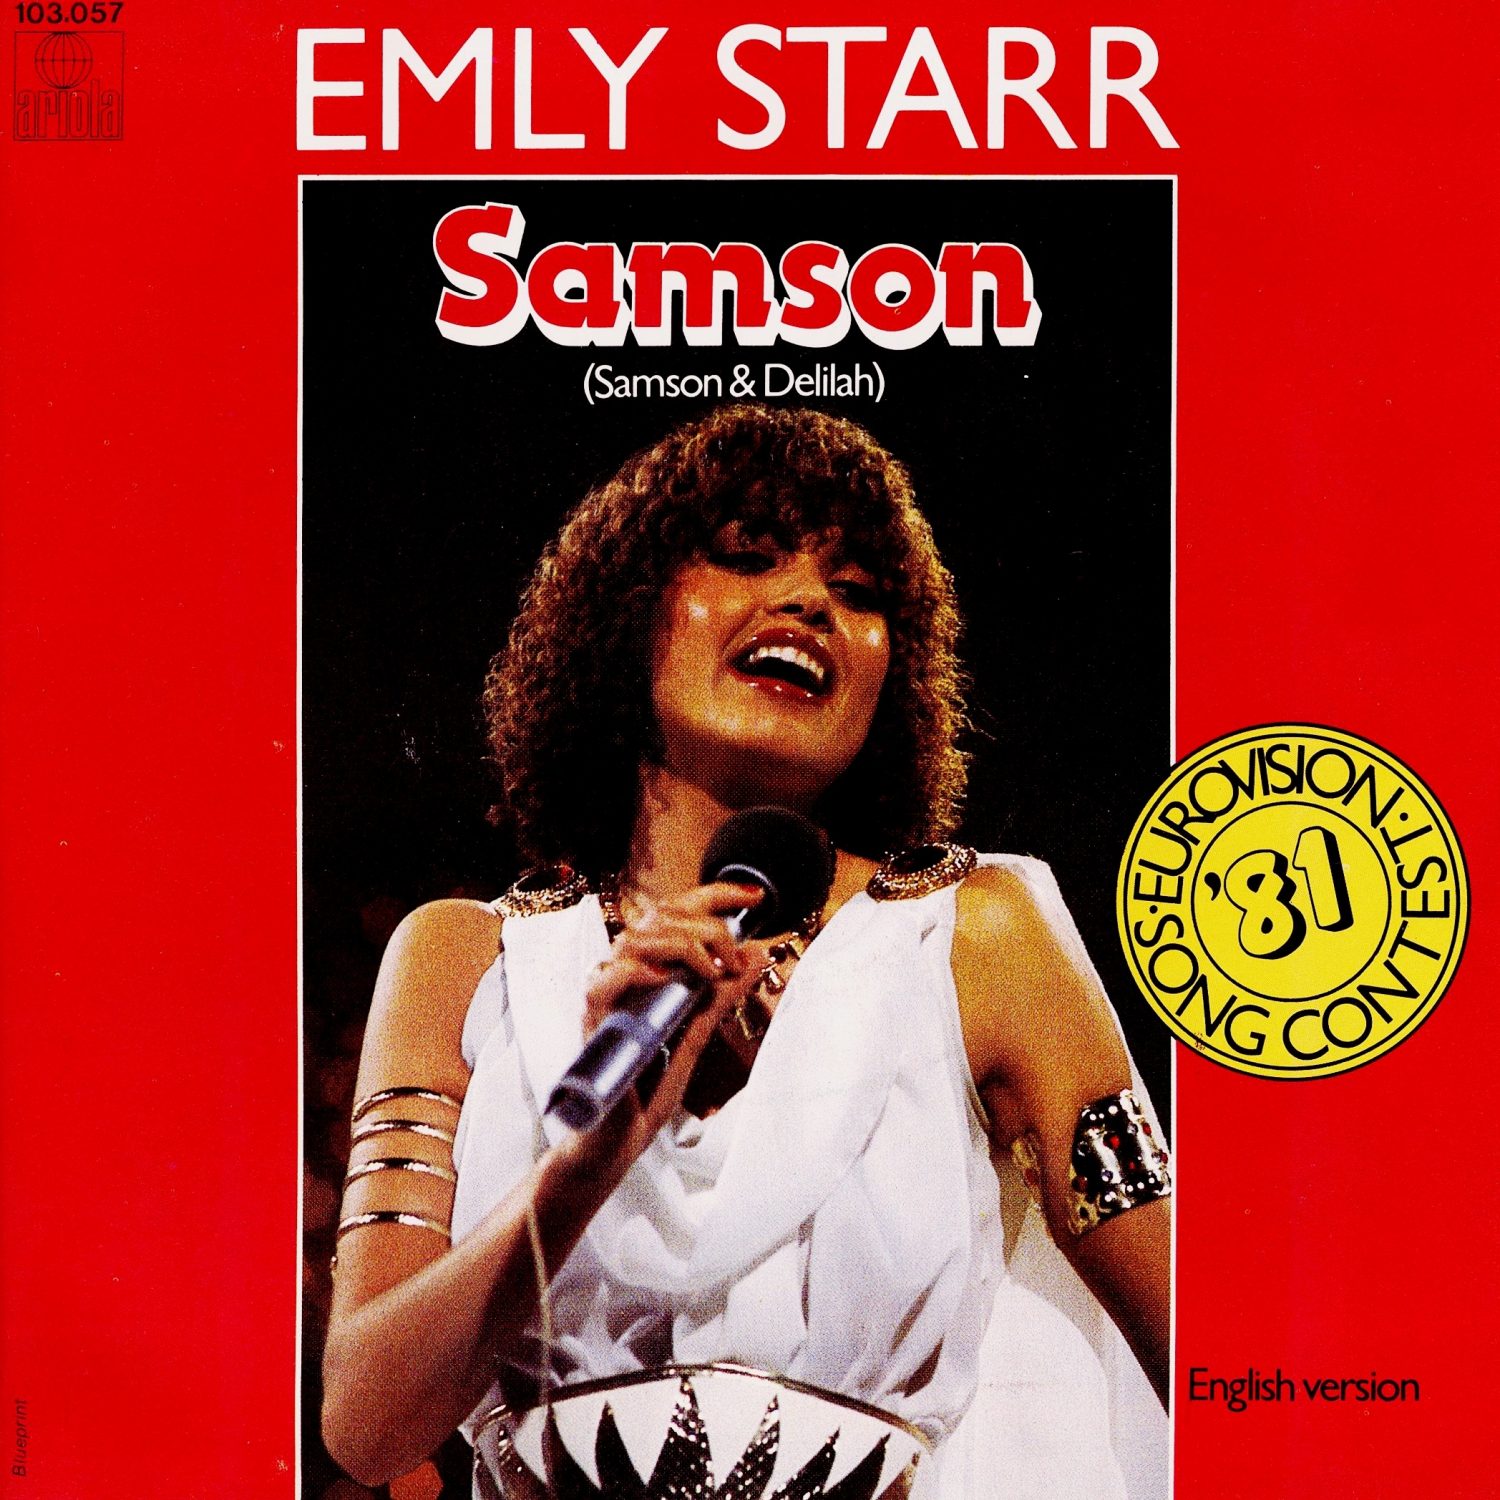 EMLY STARR SAMSON